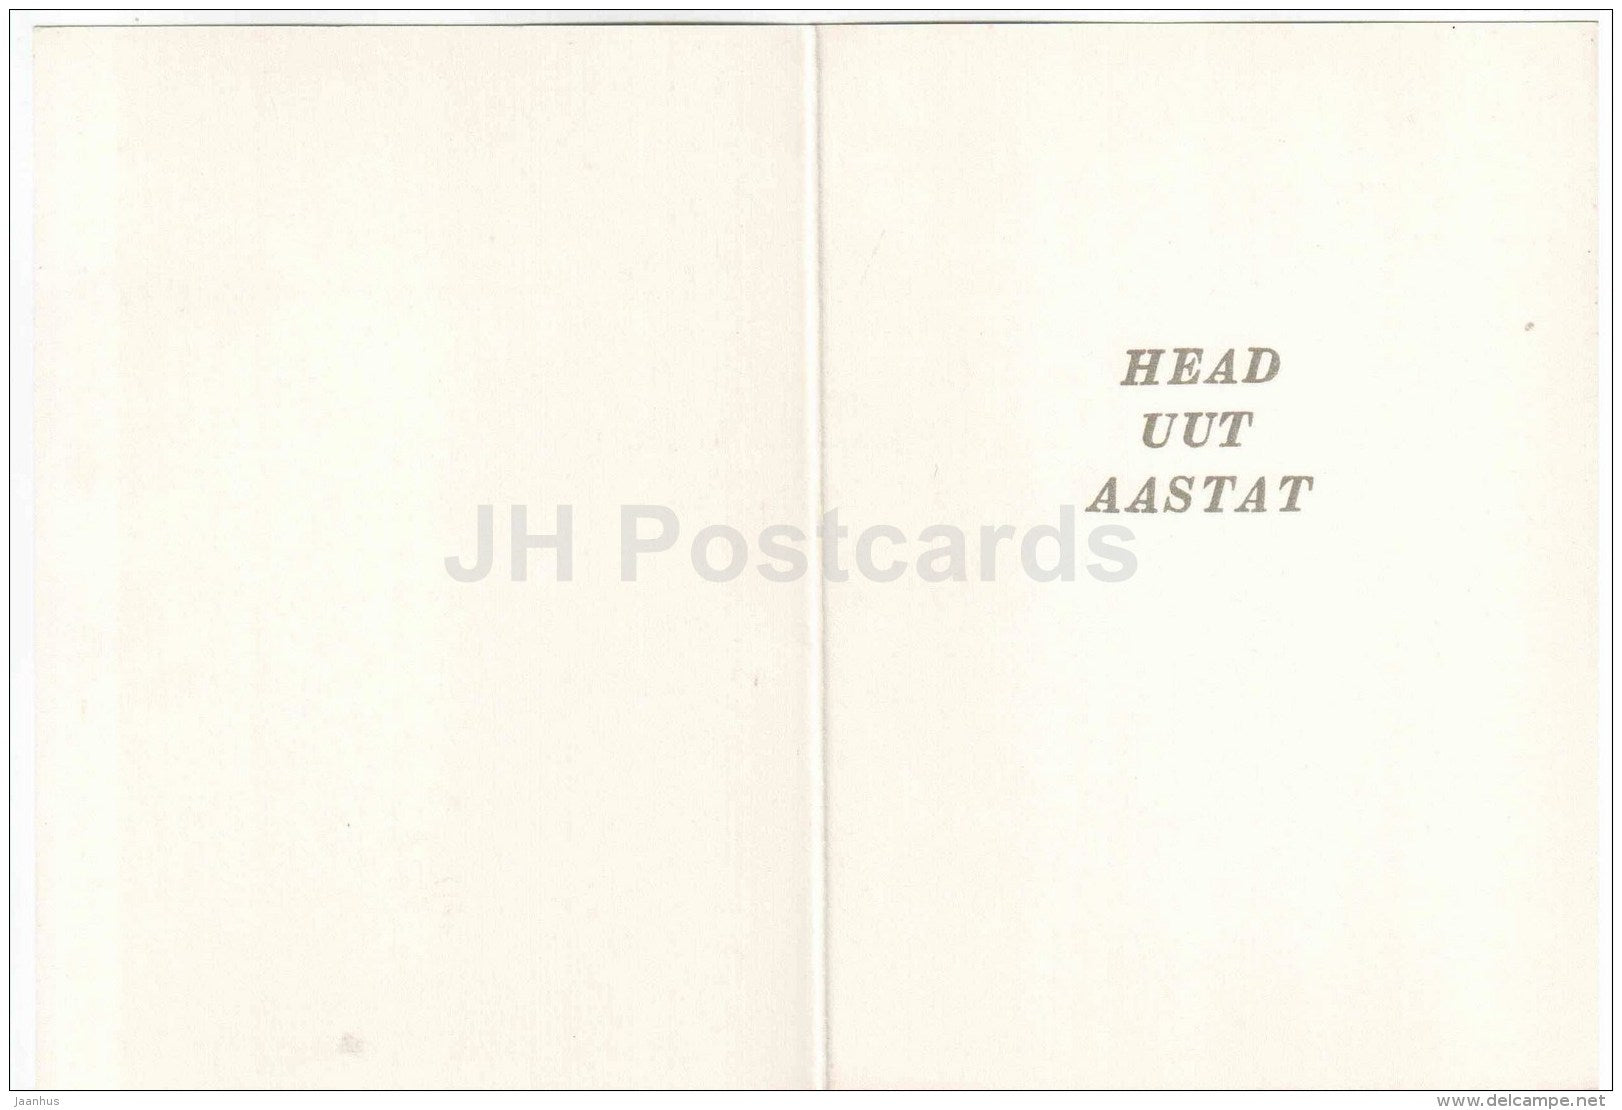 New Year greeting card by M. Vint - illustration - birds - decorations - 1971 - Estonia USSR - unused - JH Postcards